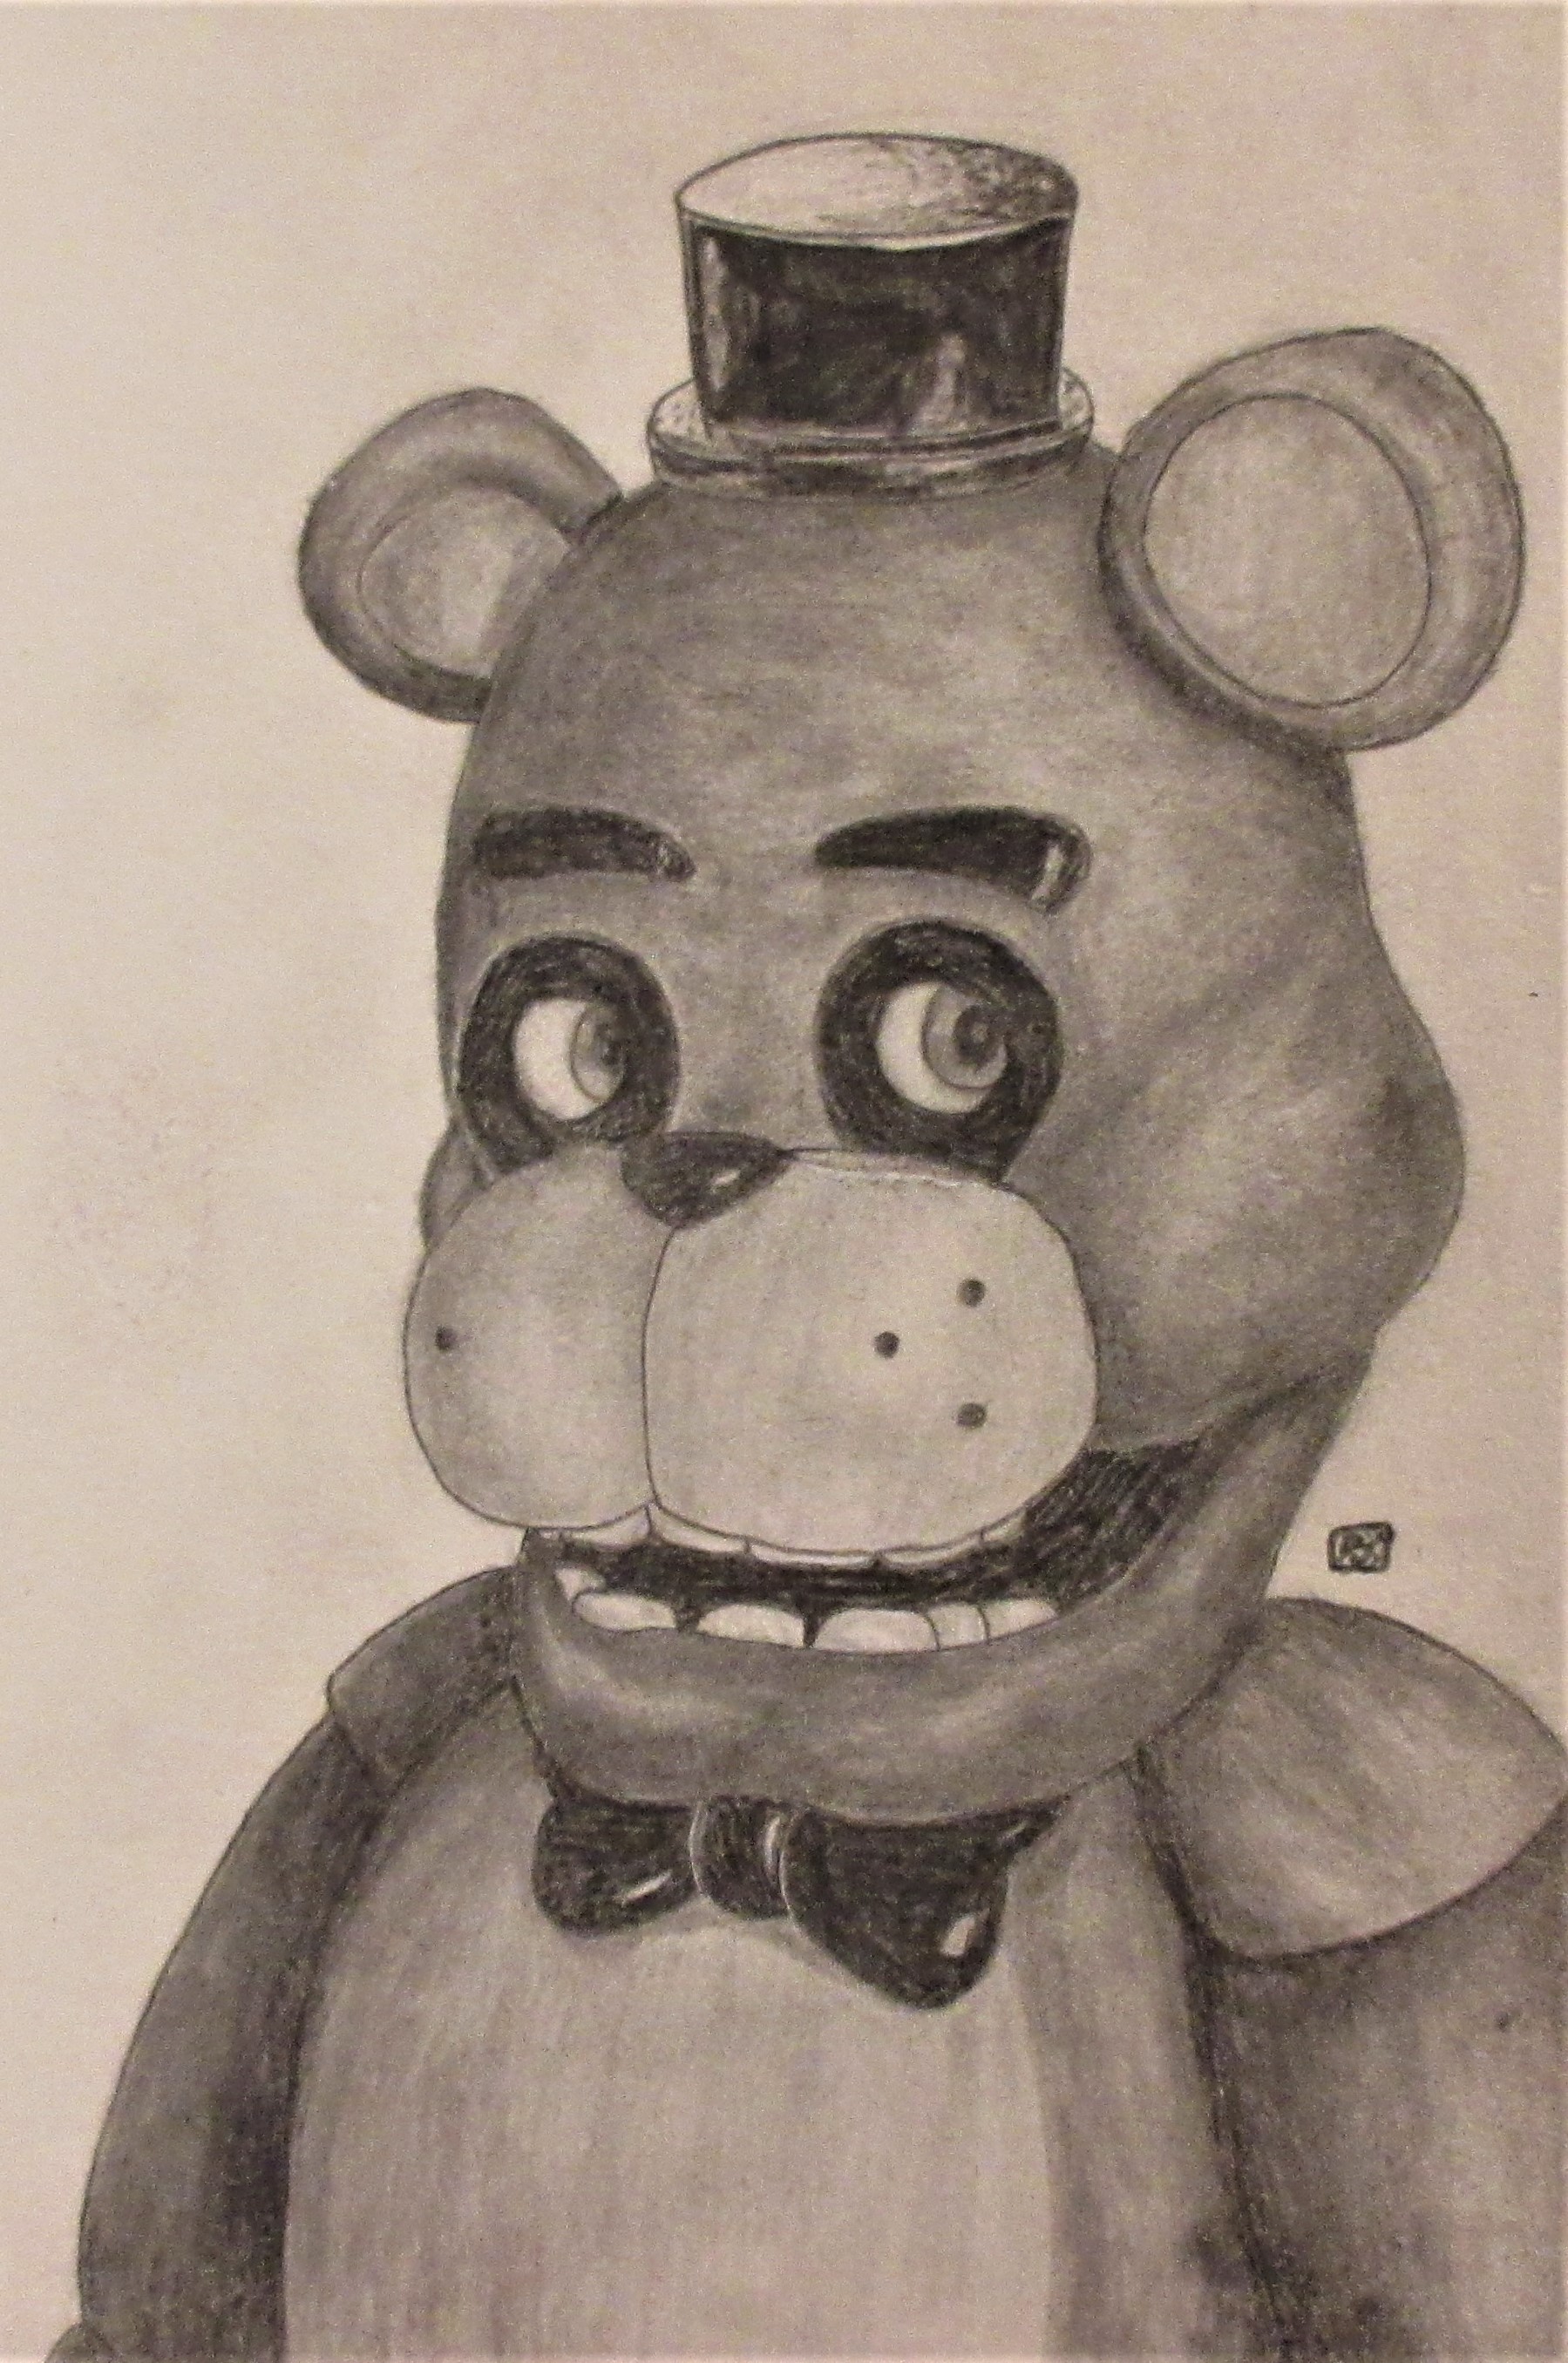 My drawing of Freddy by EvyOriginal on DeviantArt